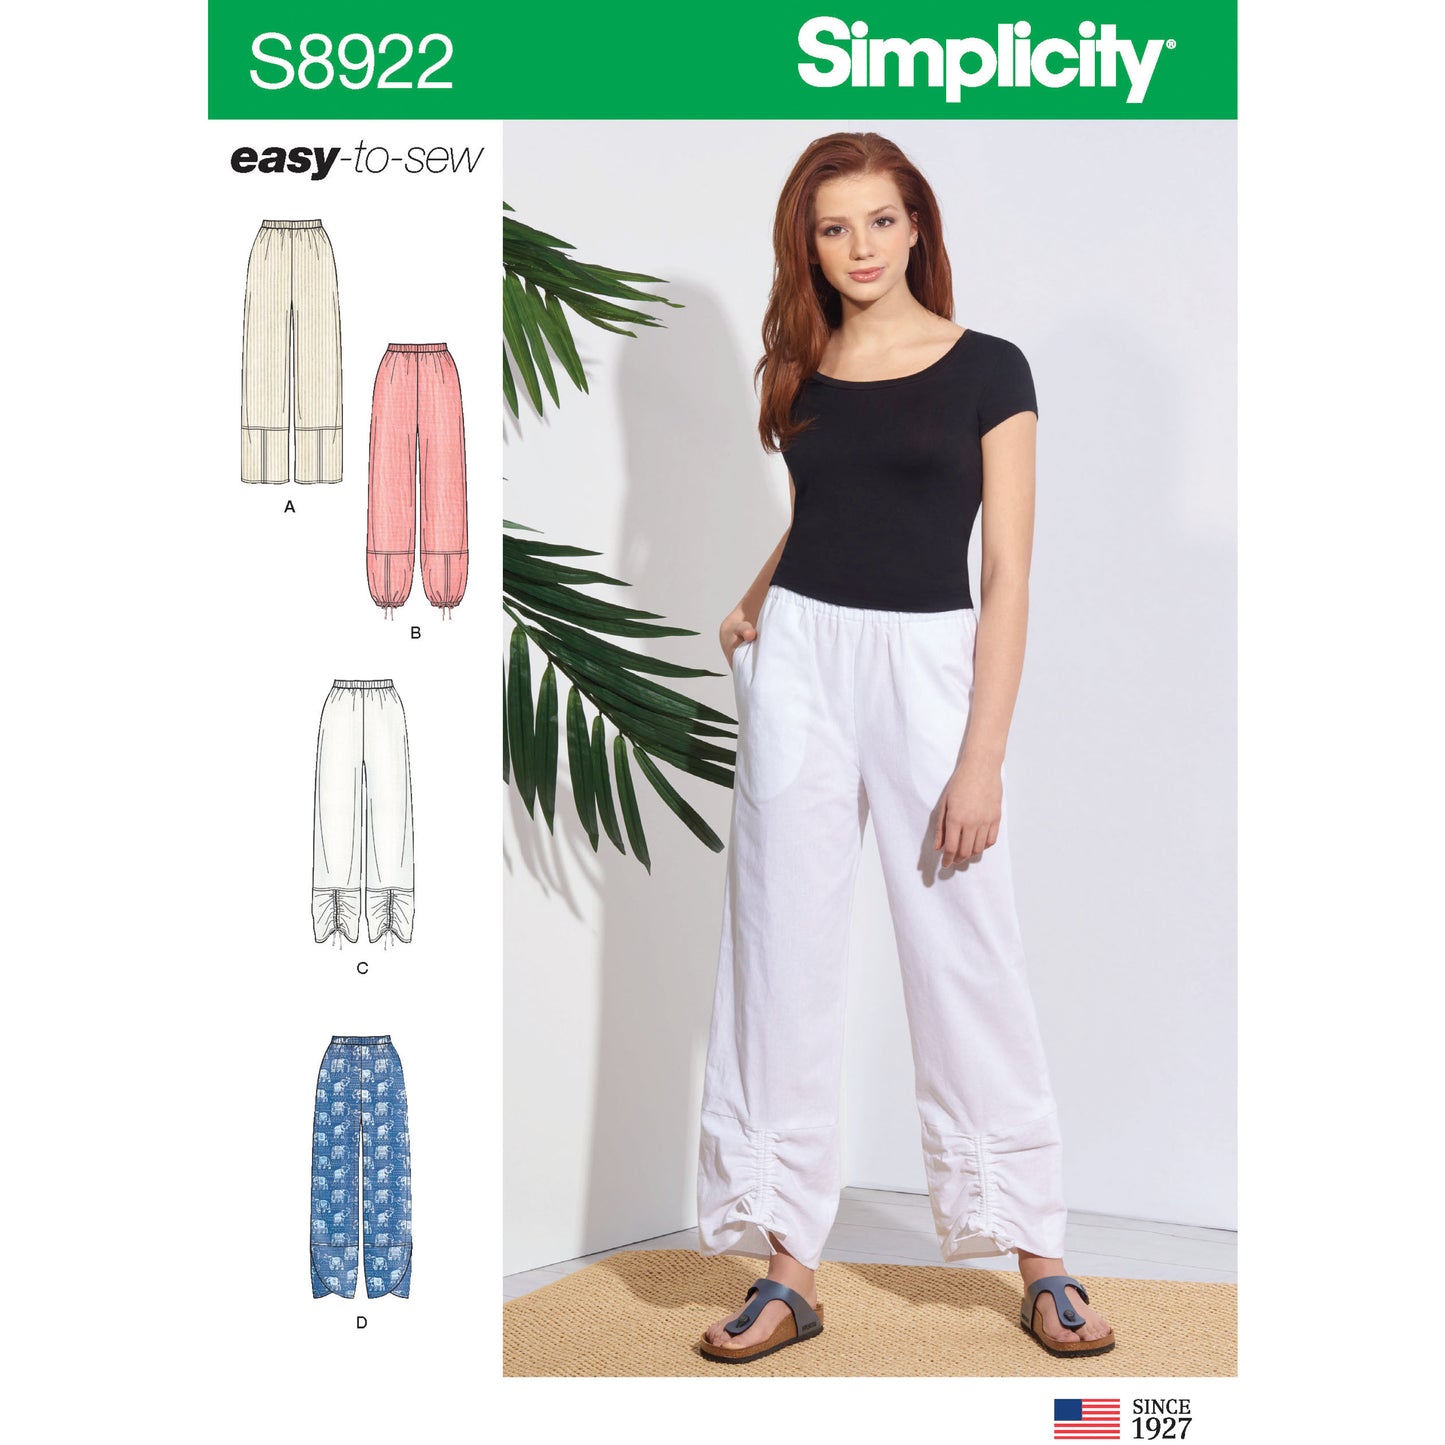 Simplicity 8922